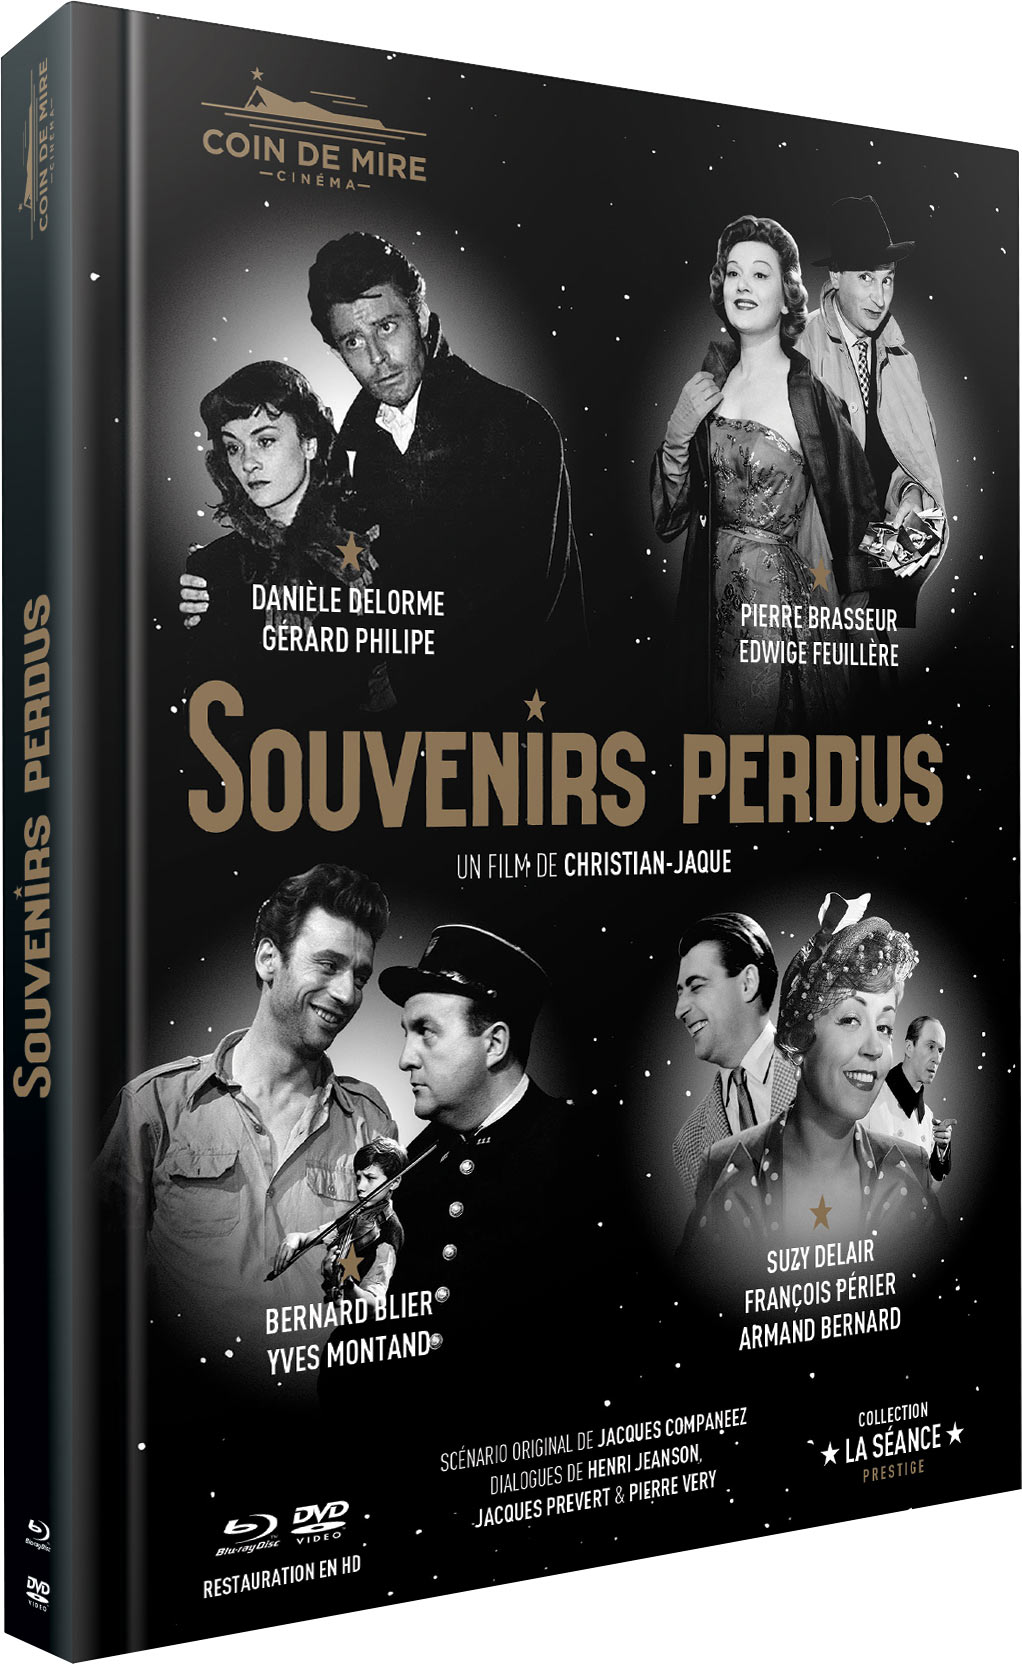 Souvenirs perdus - La Séance Prestige - Blu-ray + DVD + Goodies